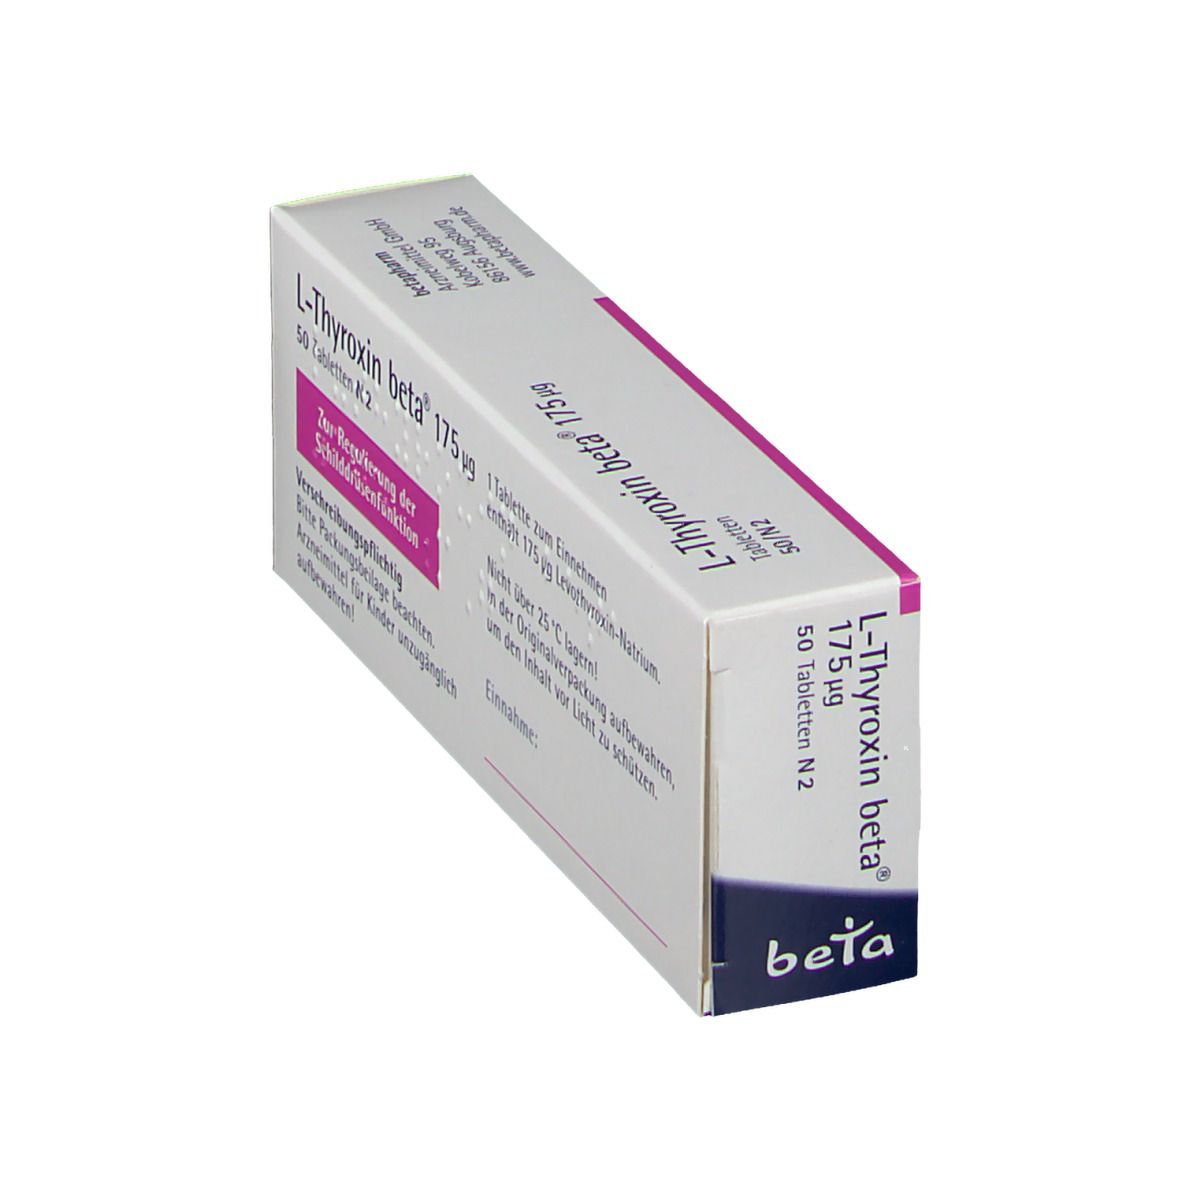 L-Thyroxin beta® 175 ug